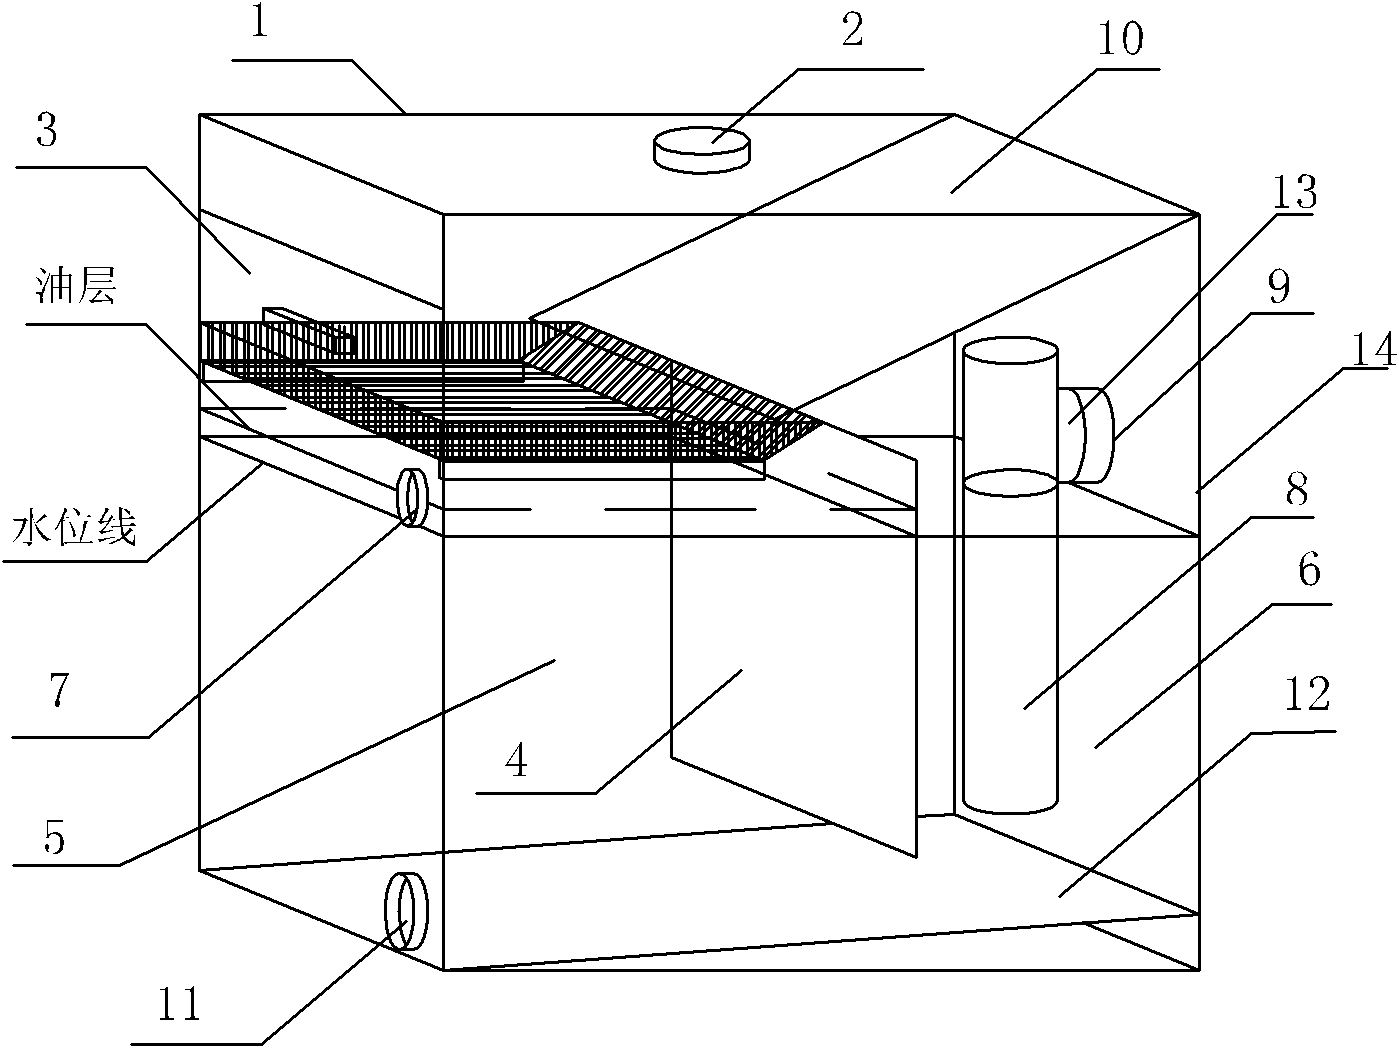 Oily sewage filtering device arranged below trough